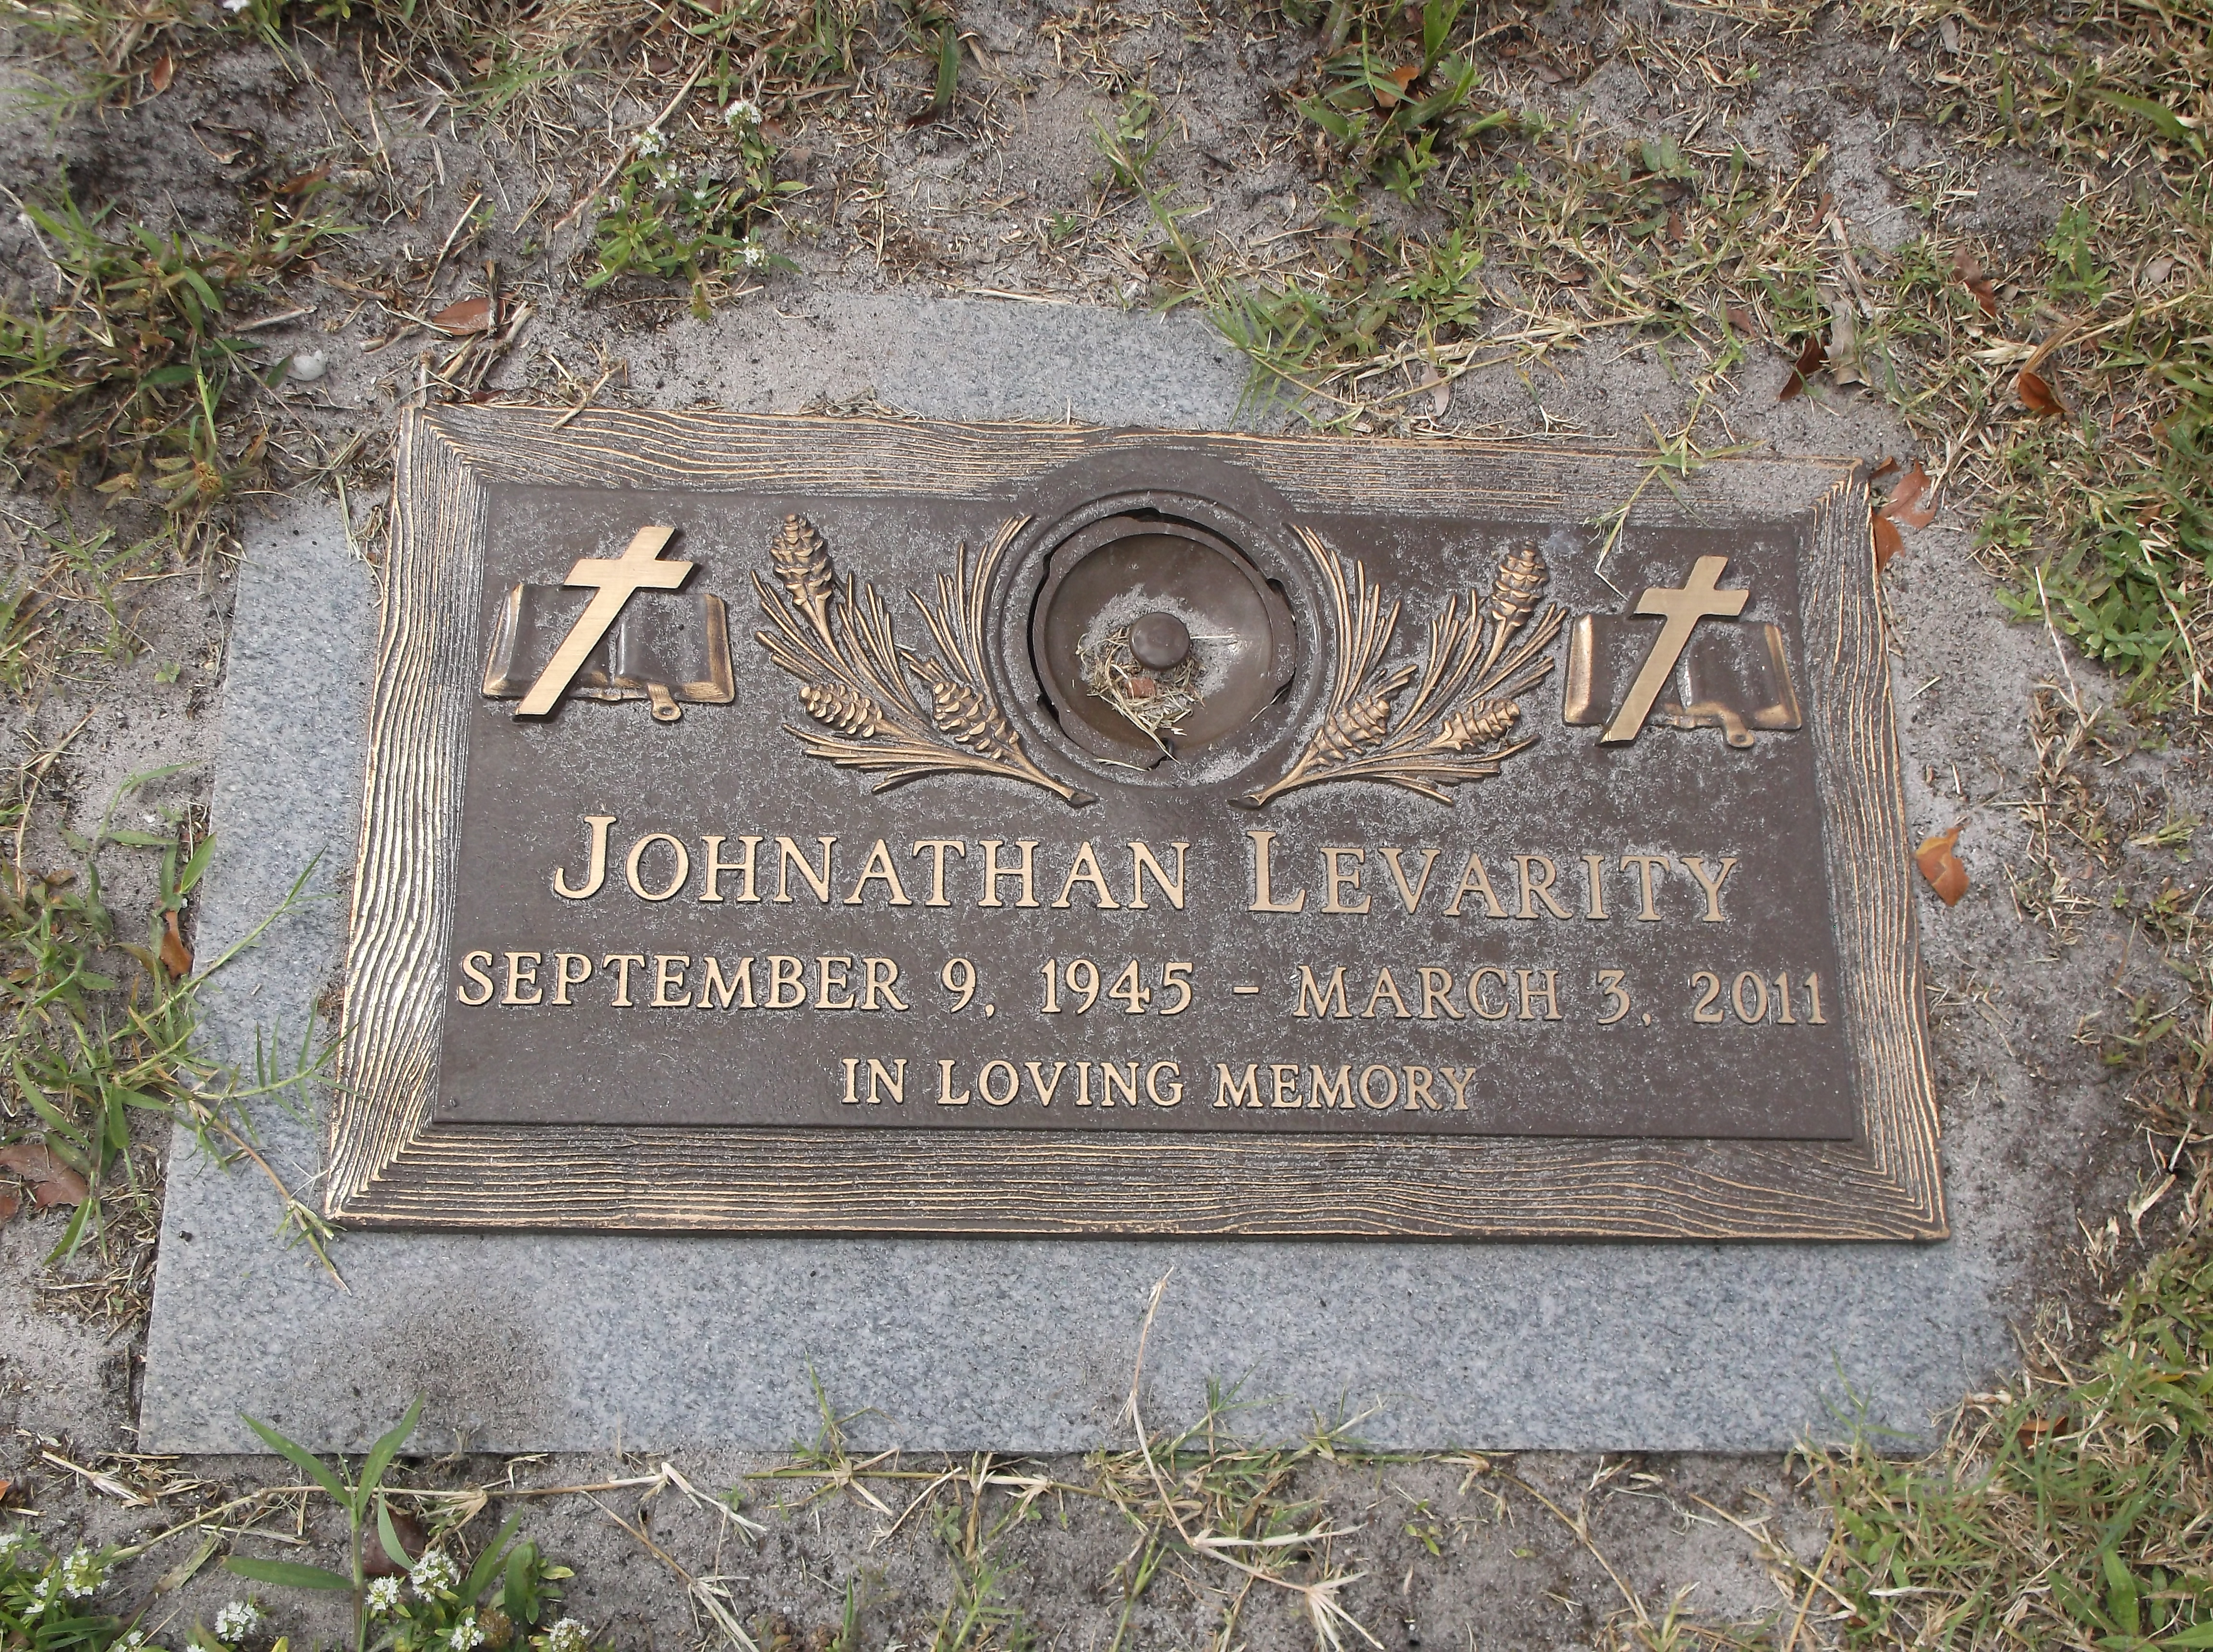 Johnathan Levarity